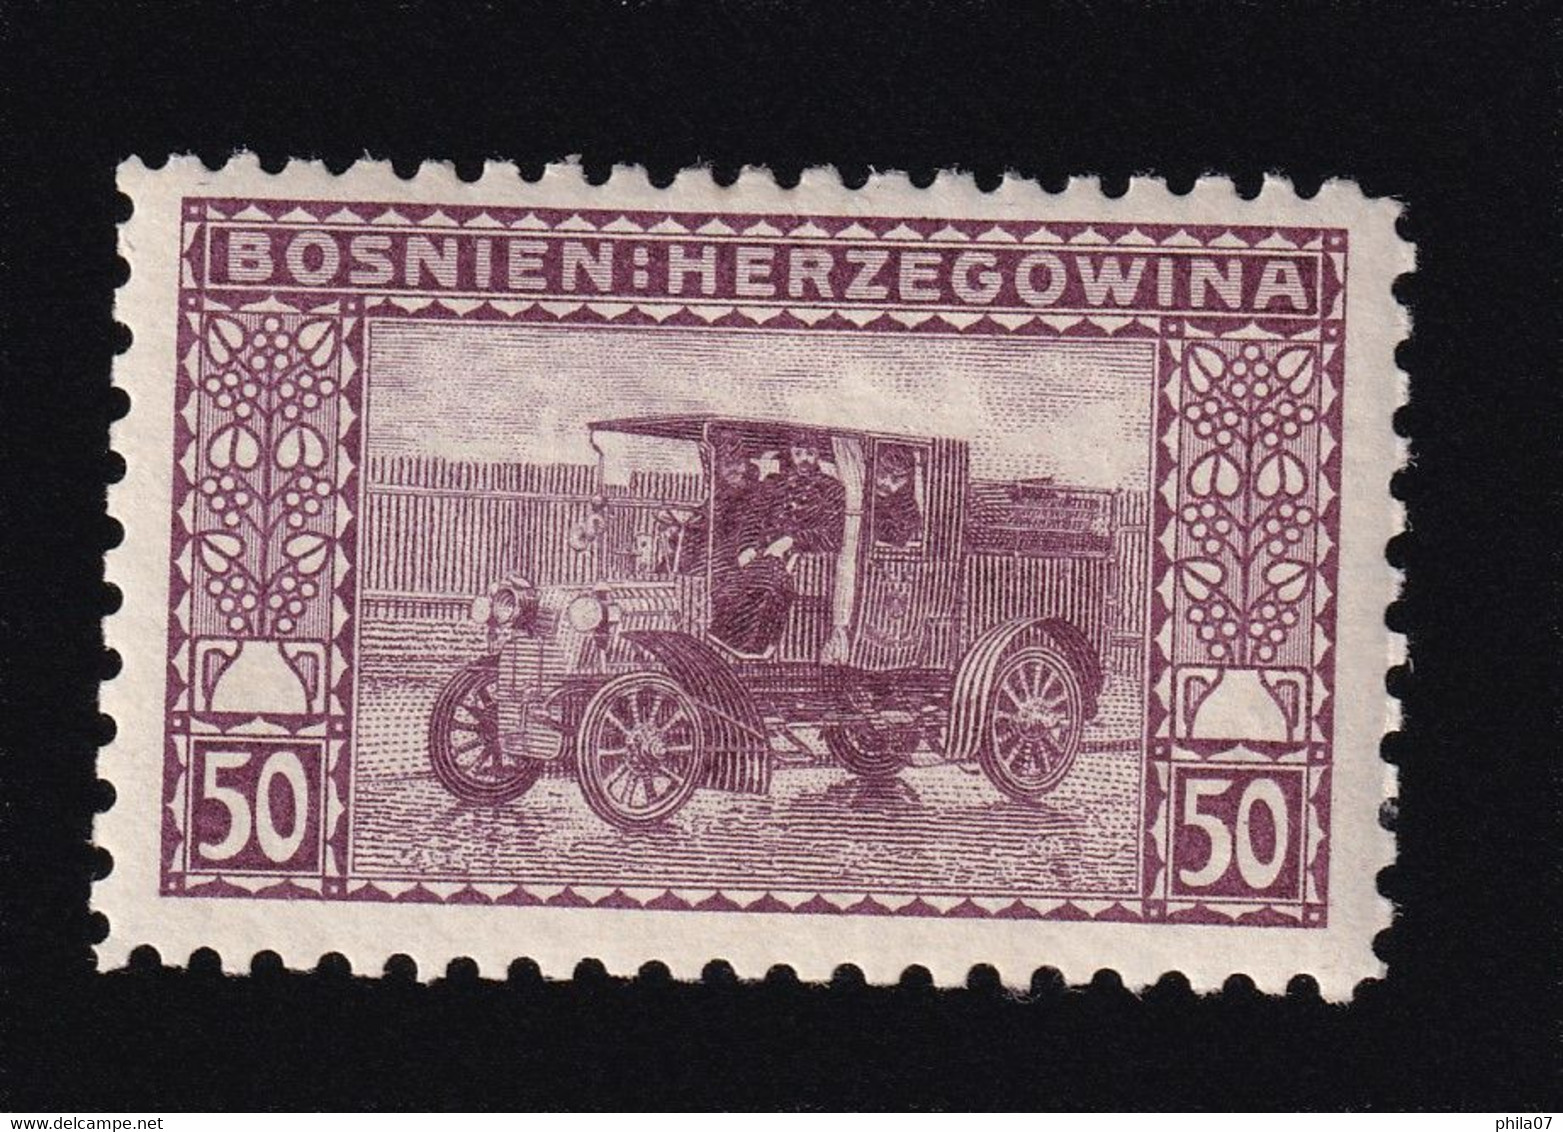 BOSNIA AND HERZEGOVINA - Landscape Stamp 50 Hellera, Perforation 9 ½, MNH - Bosnie-Herzegovine